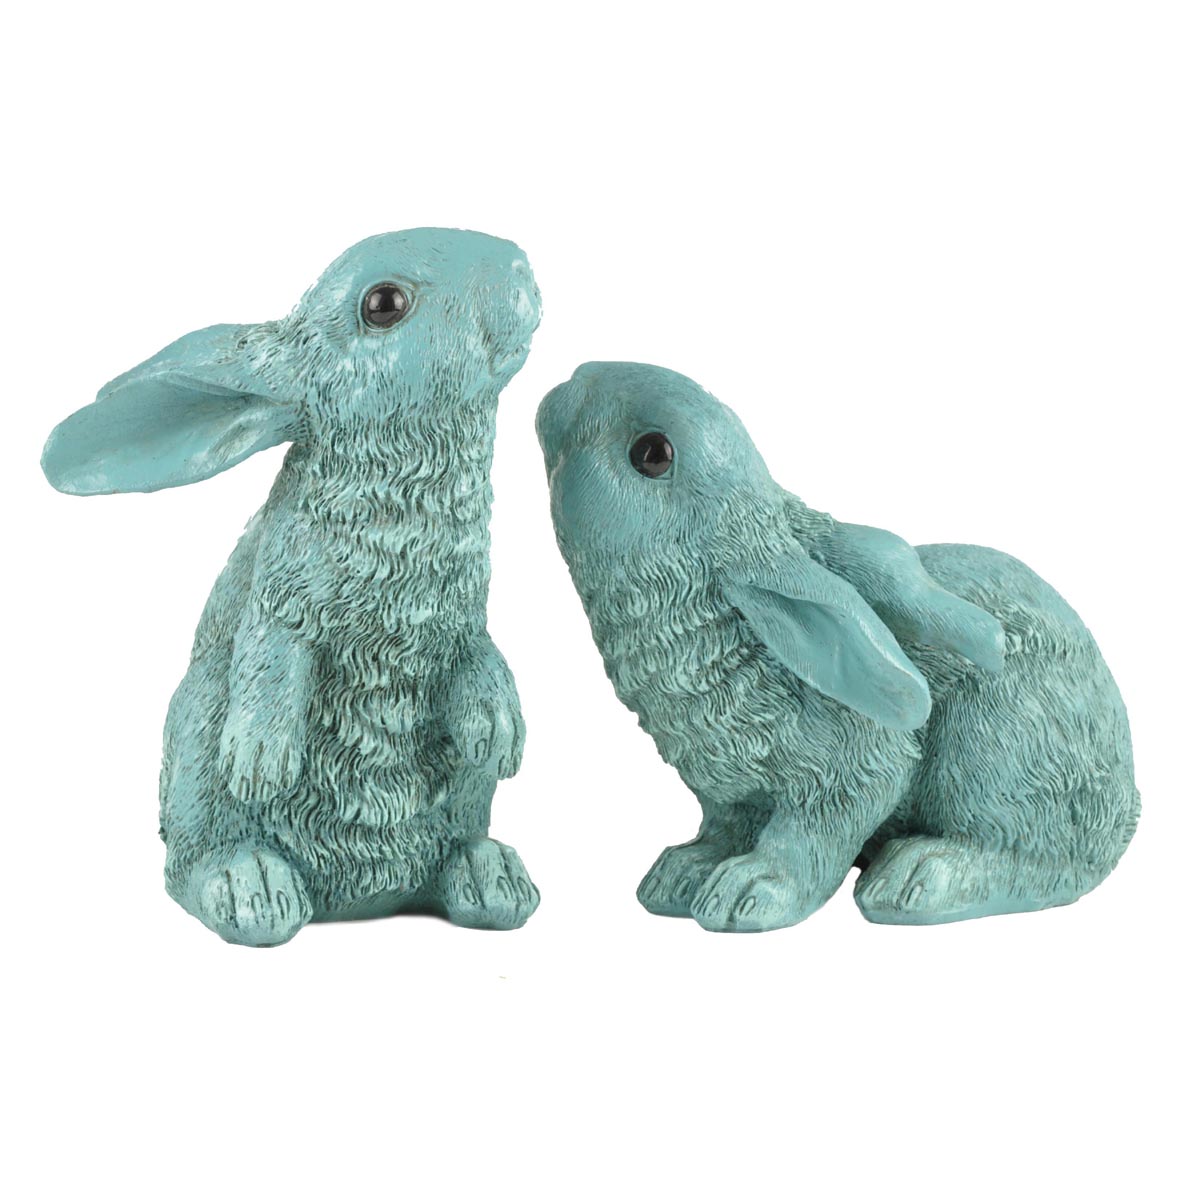 Ennas easter bunny figurines micro landscape